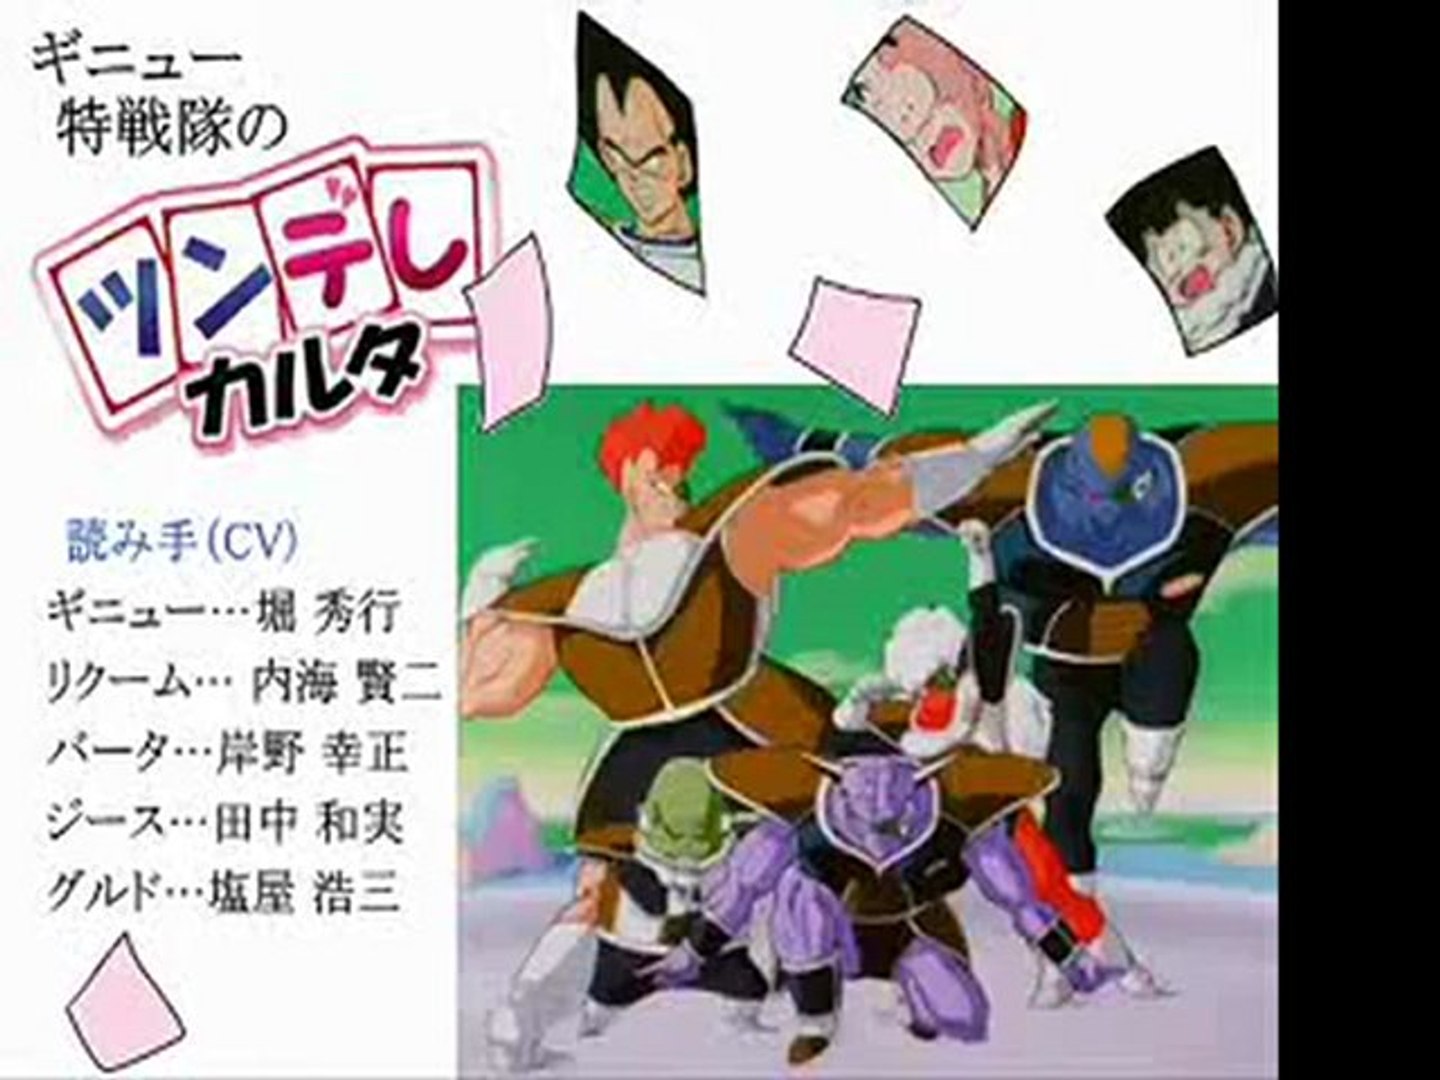 Goku vs Naruto [THE RAP BATTLE] - 動画 Dailymotion